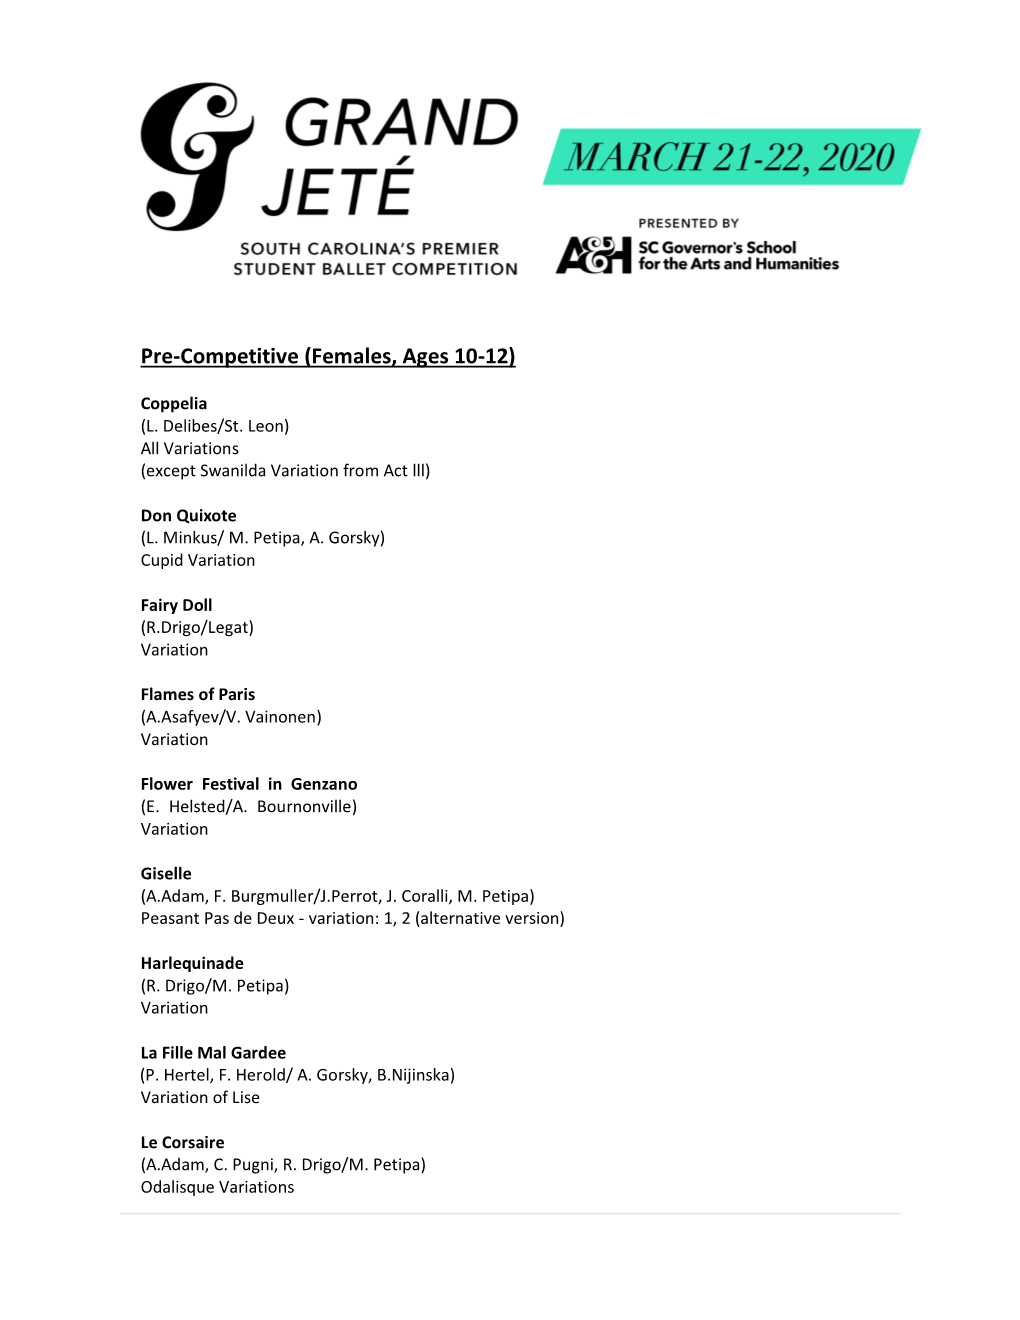 Grand Jete 2020 Repertoire List